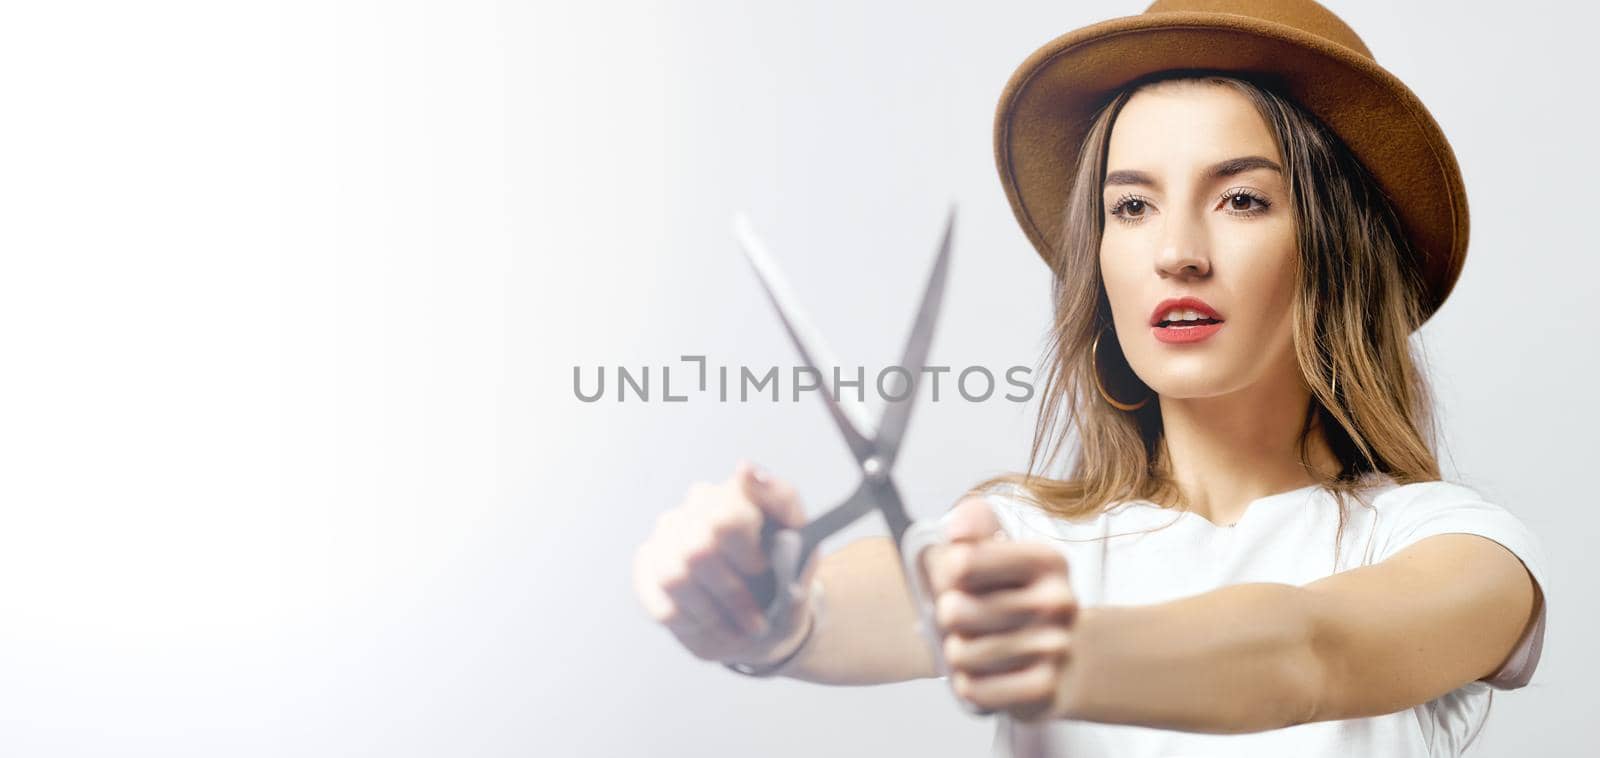 A woman wearing a hat looking through scissors by AntonIlchanka